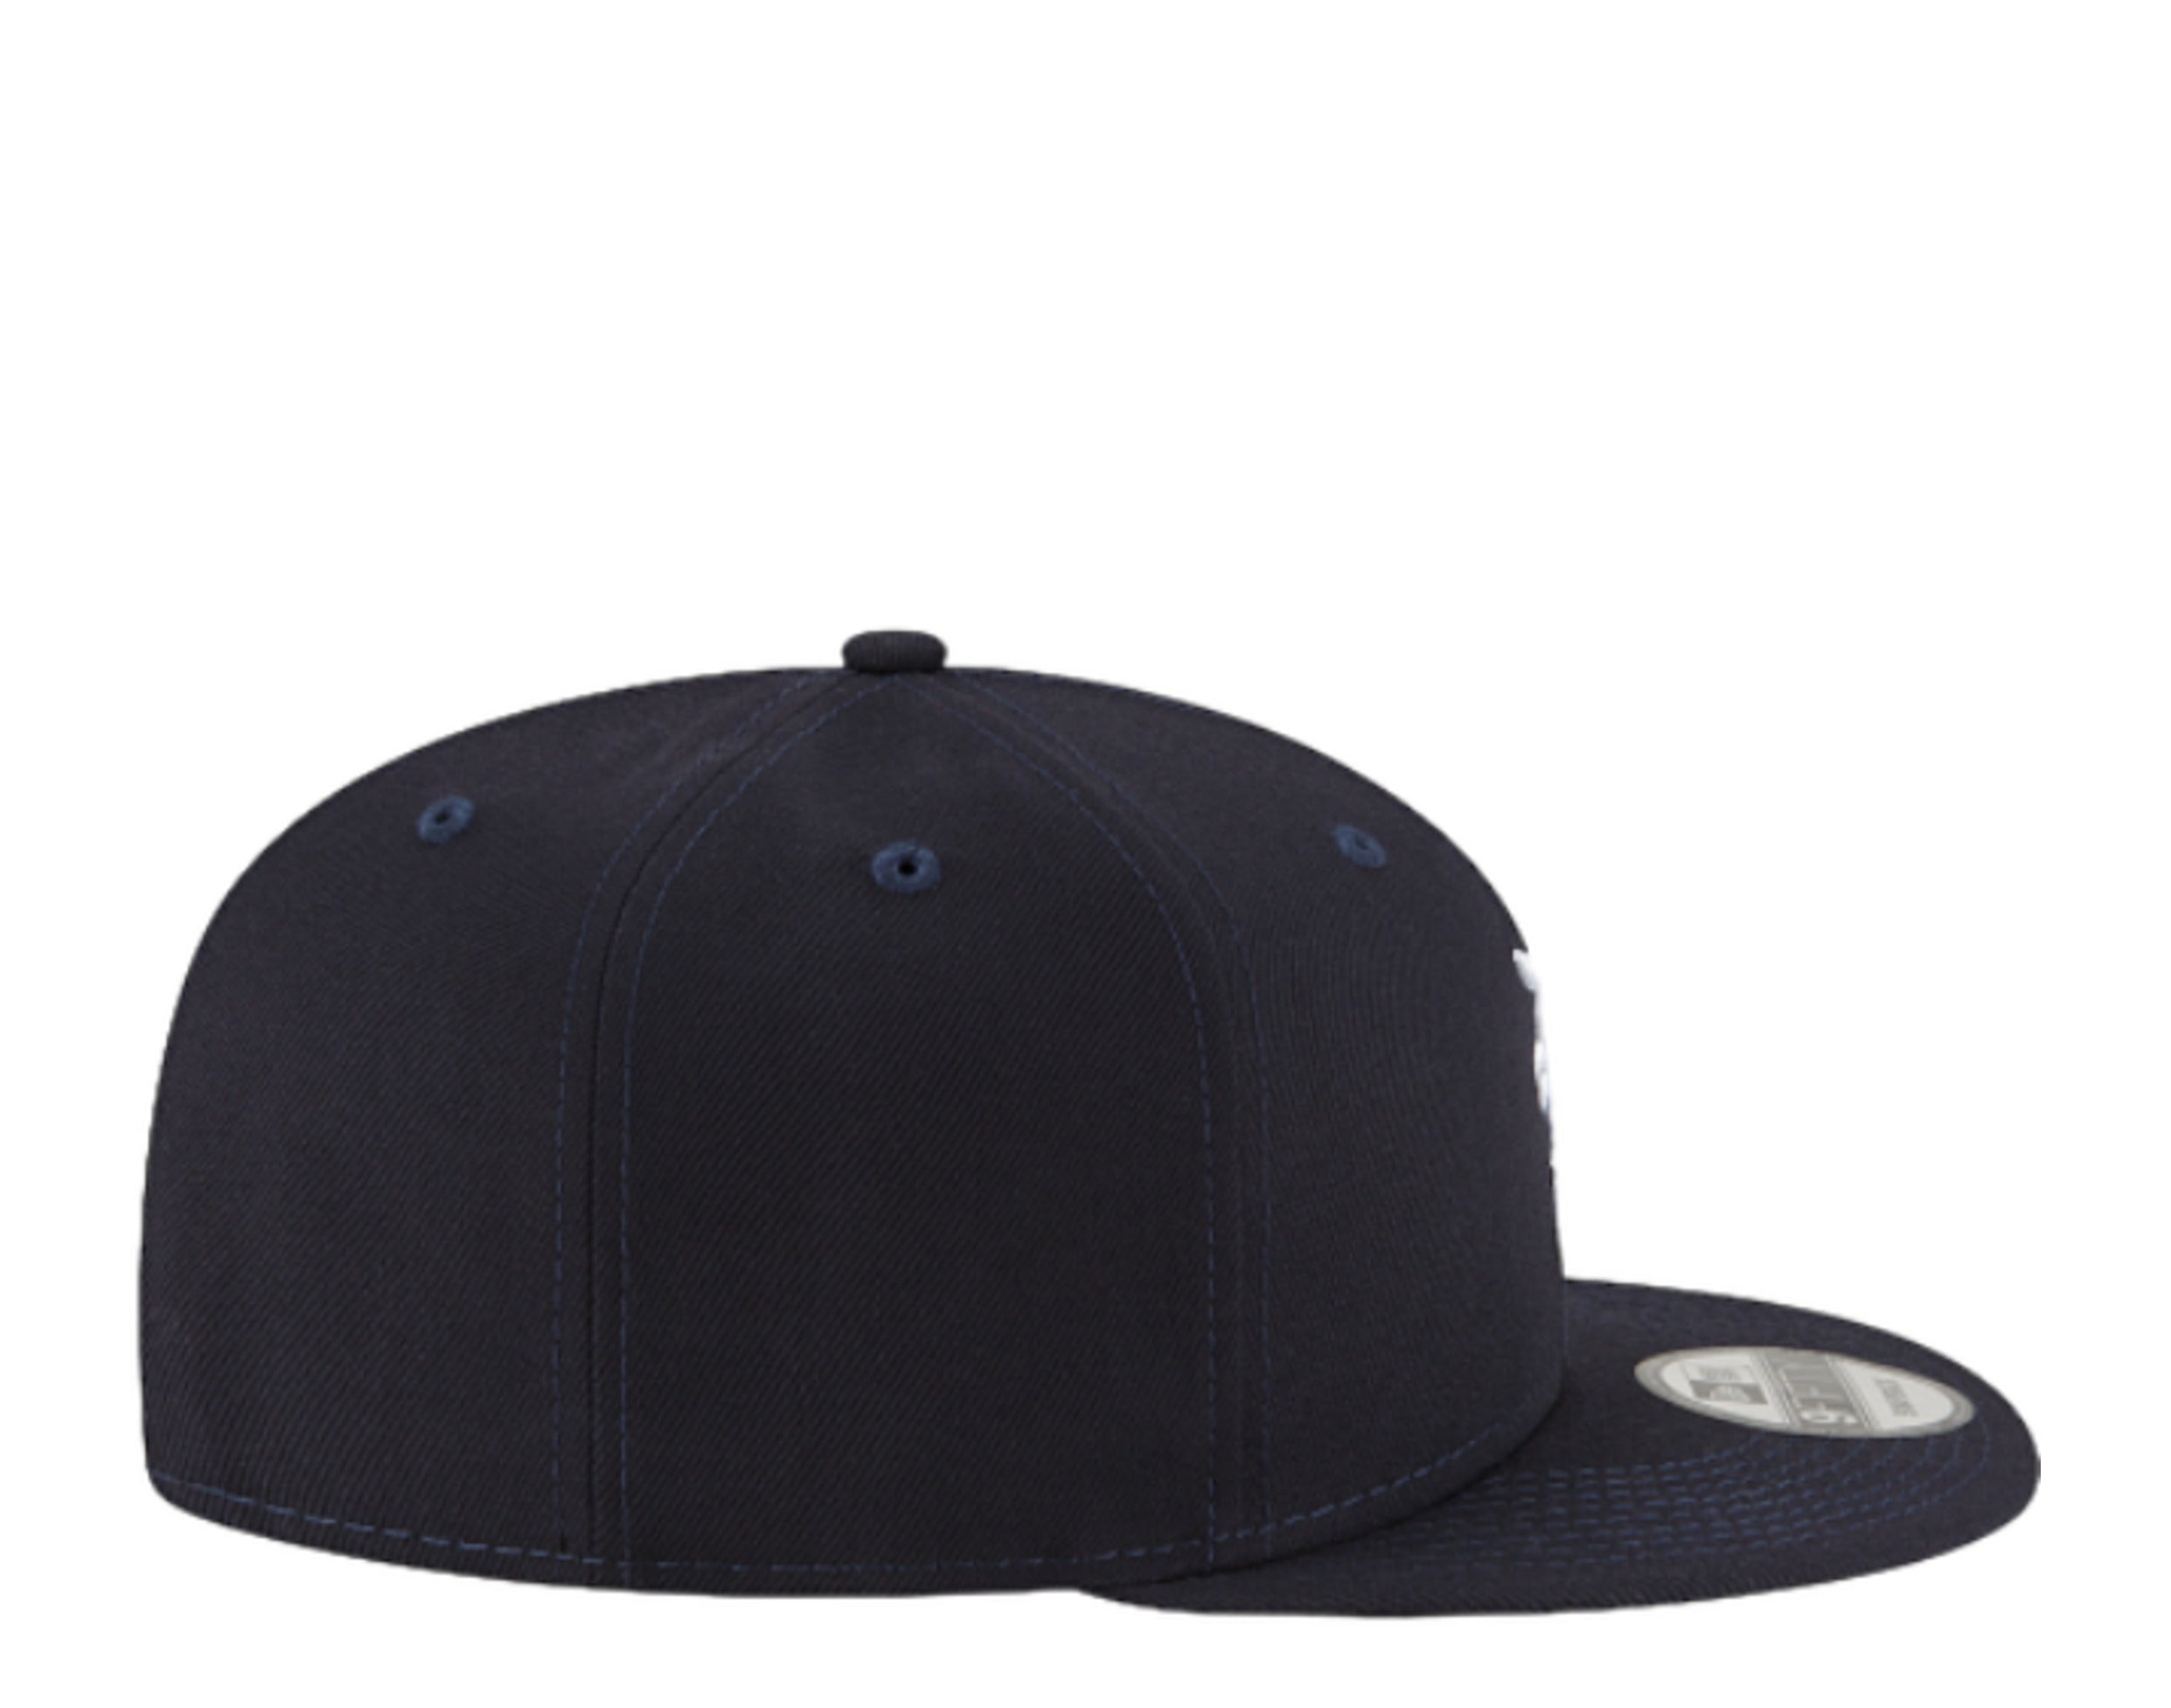 New Jersey Devils Black Base 9Fifty Snapback - New Era cap